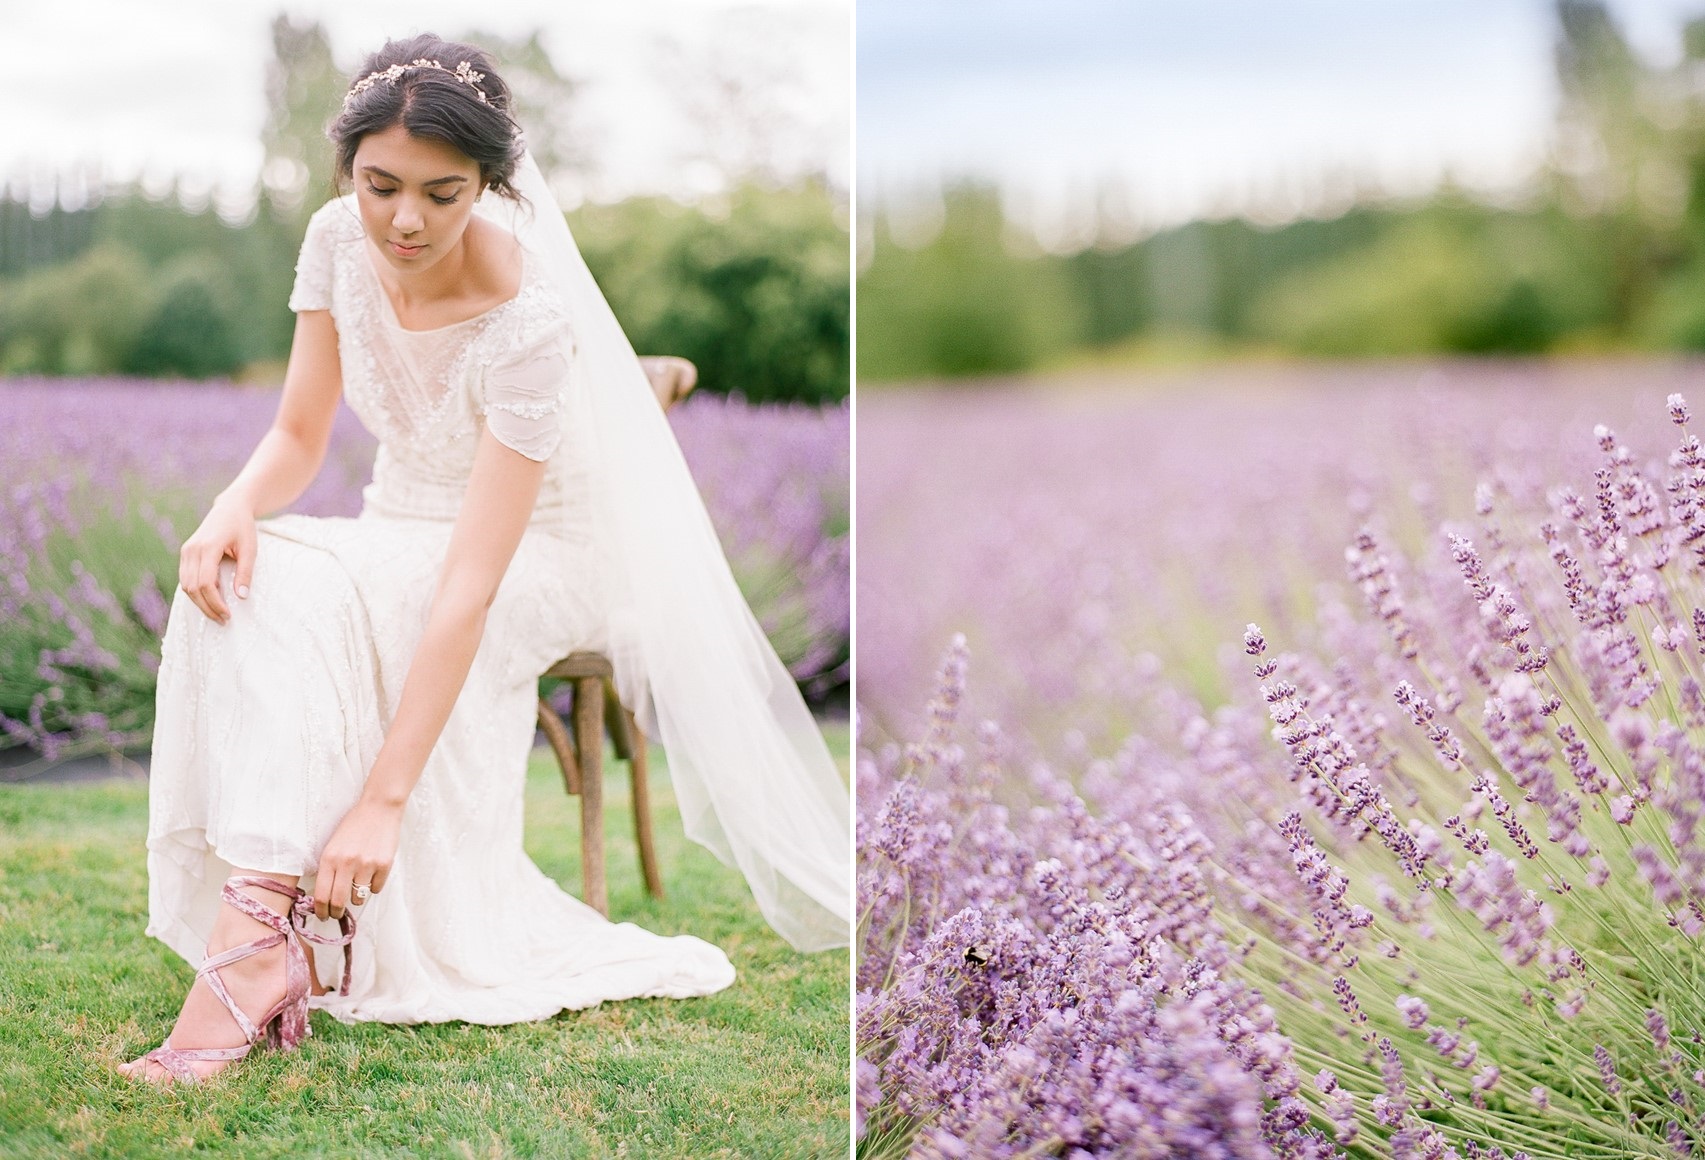 Woodinville Lavender Farm Wedding Inspiration